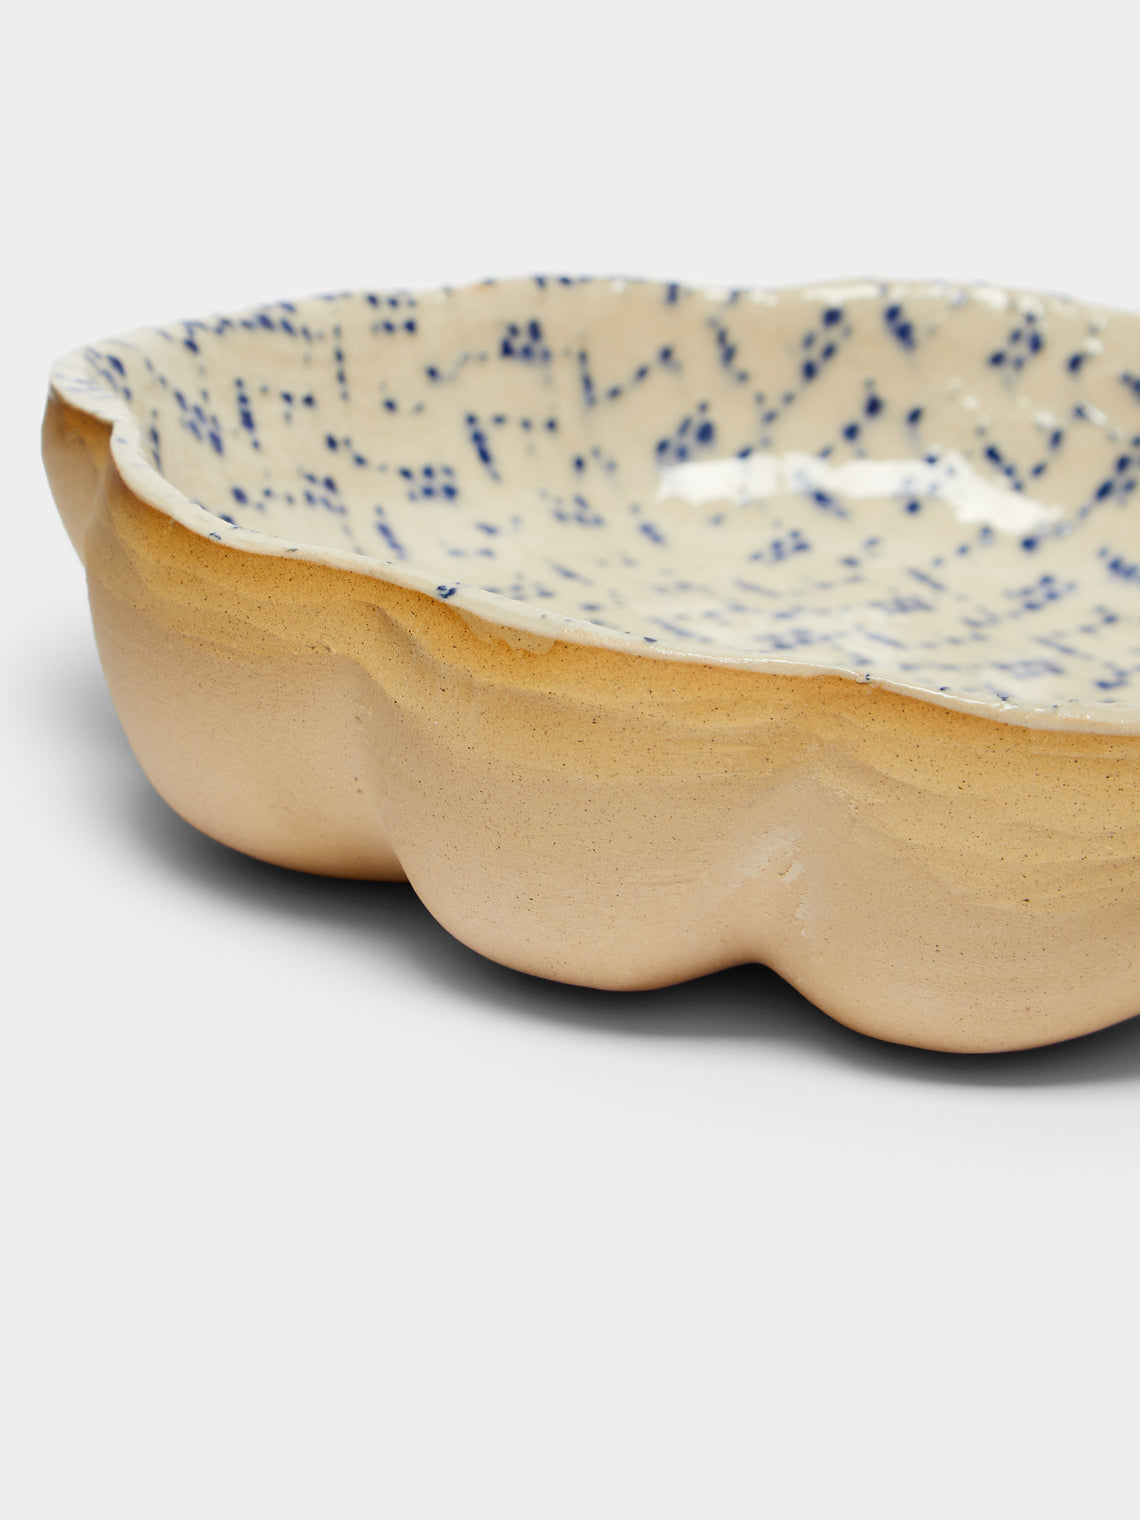 Terrafirma Ceramics - Hand-Printed Ceramic Medium Scalloped Bowl - Blue - ABASK